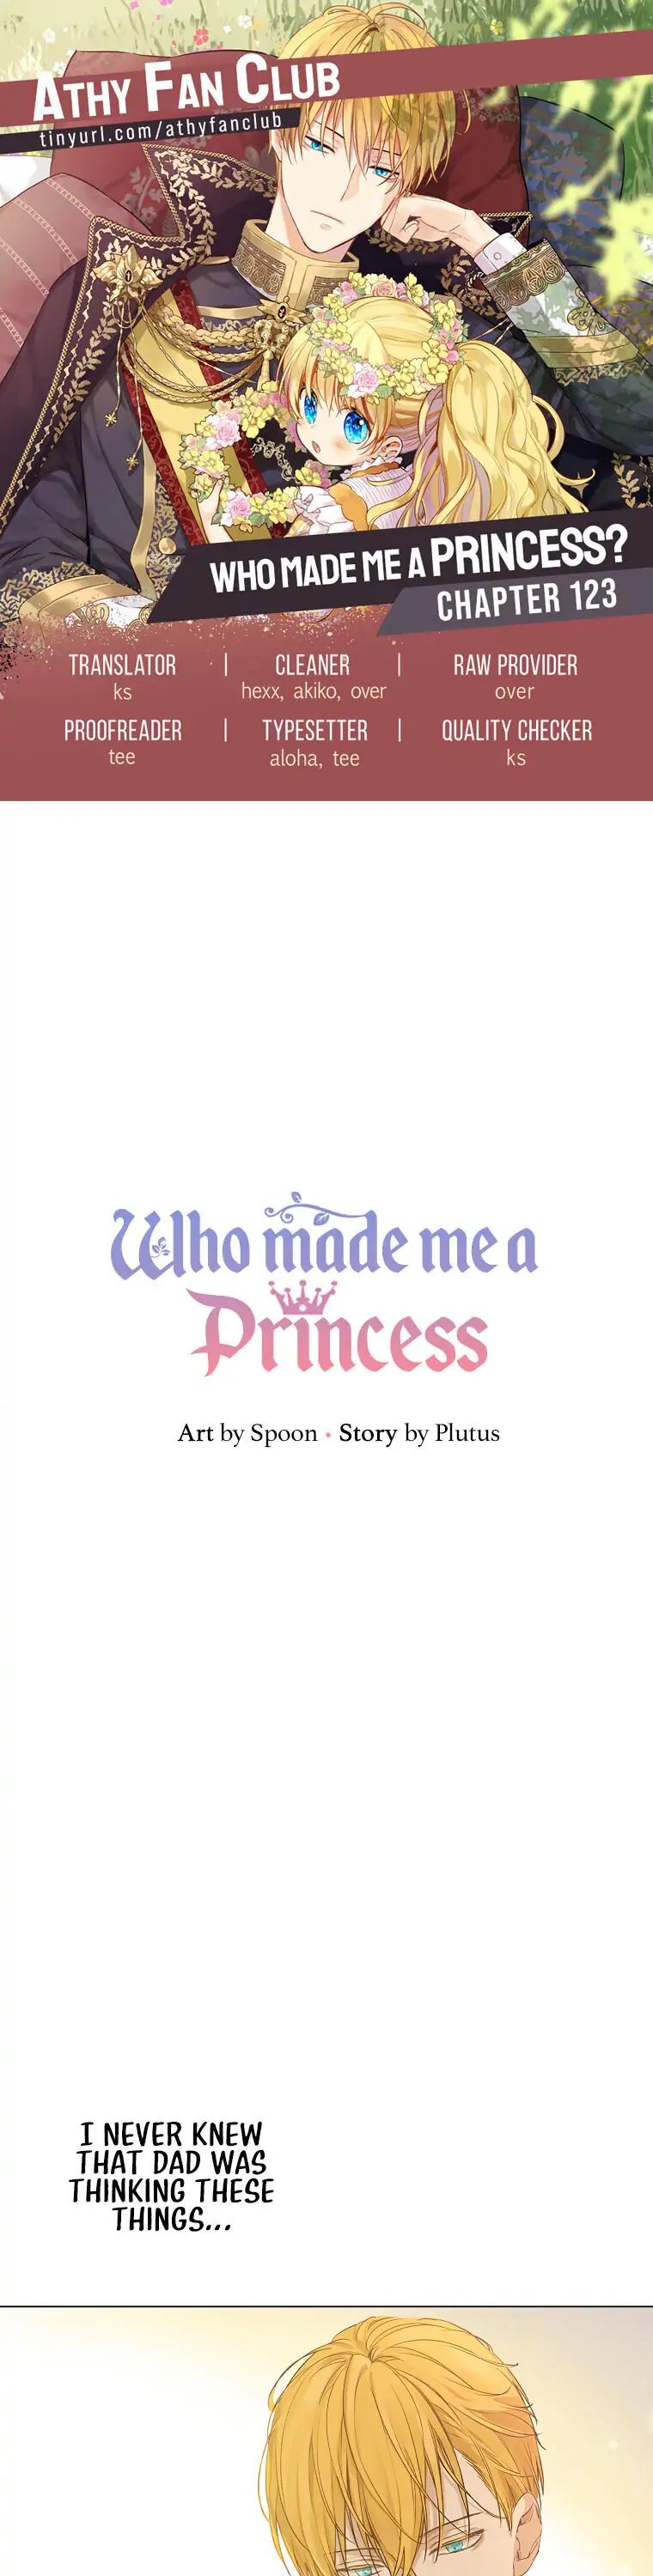 Who Made Me a Princess image